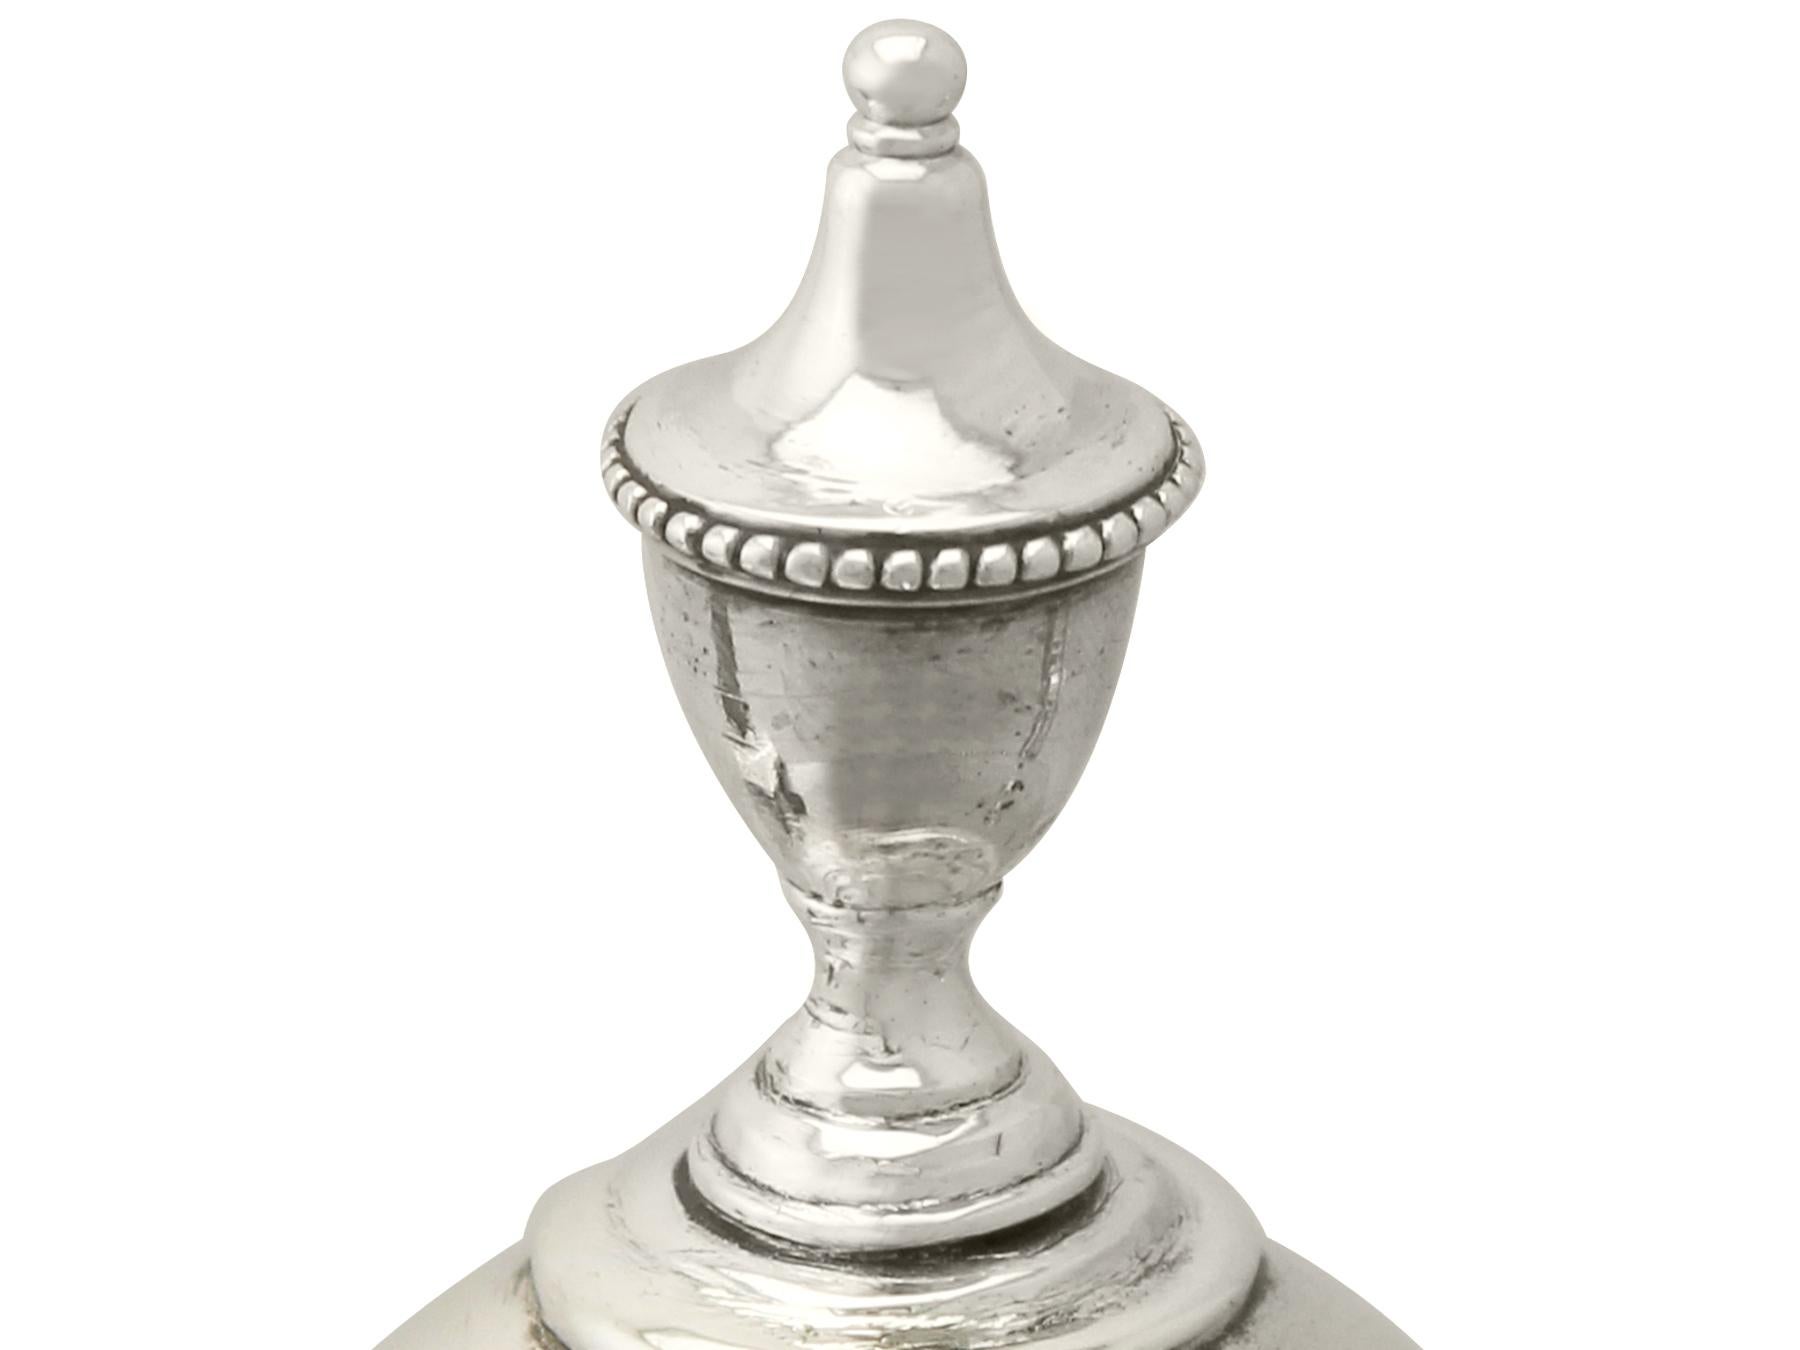 Antique George III Sterling Silver Coffee Pot by Hester Bateman 1